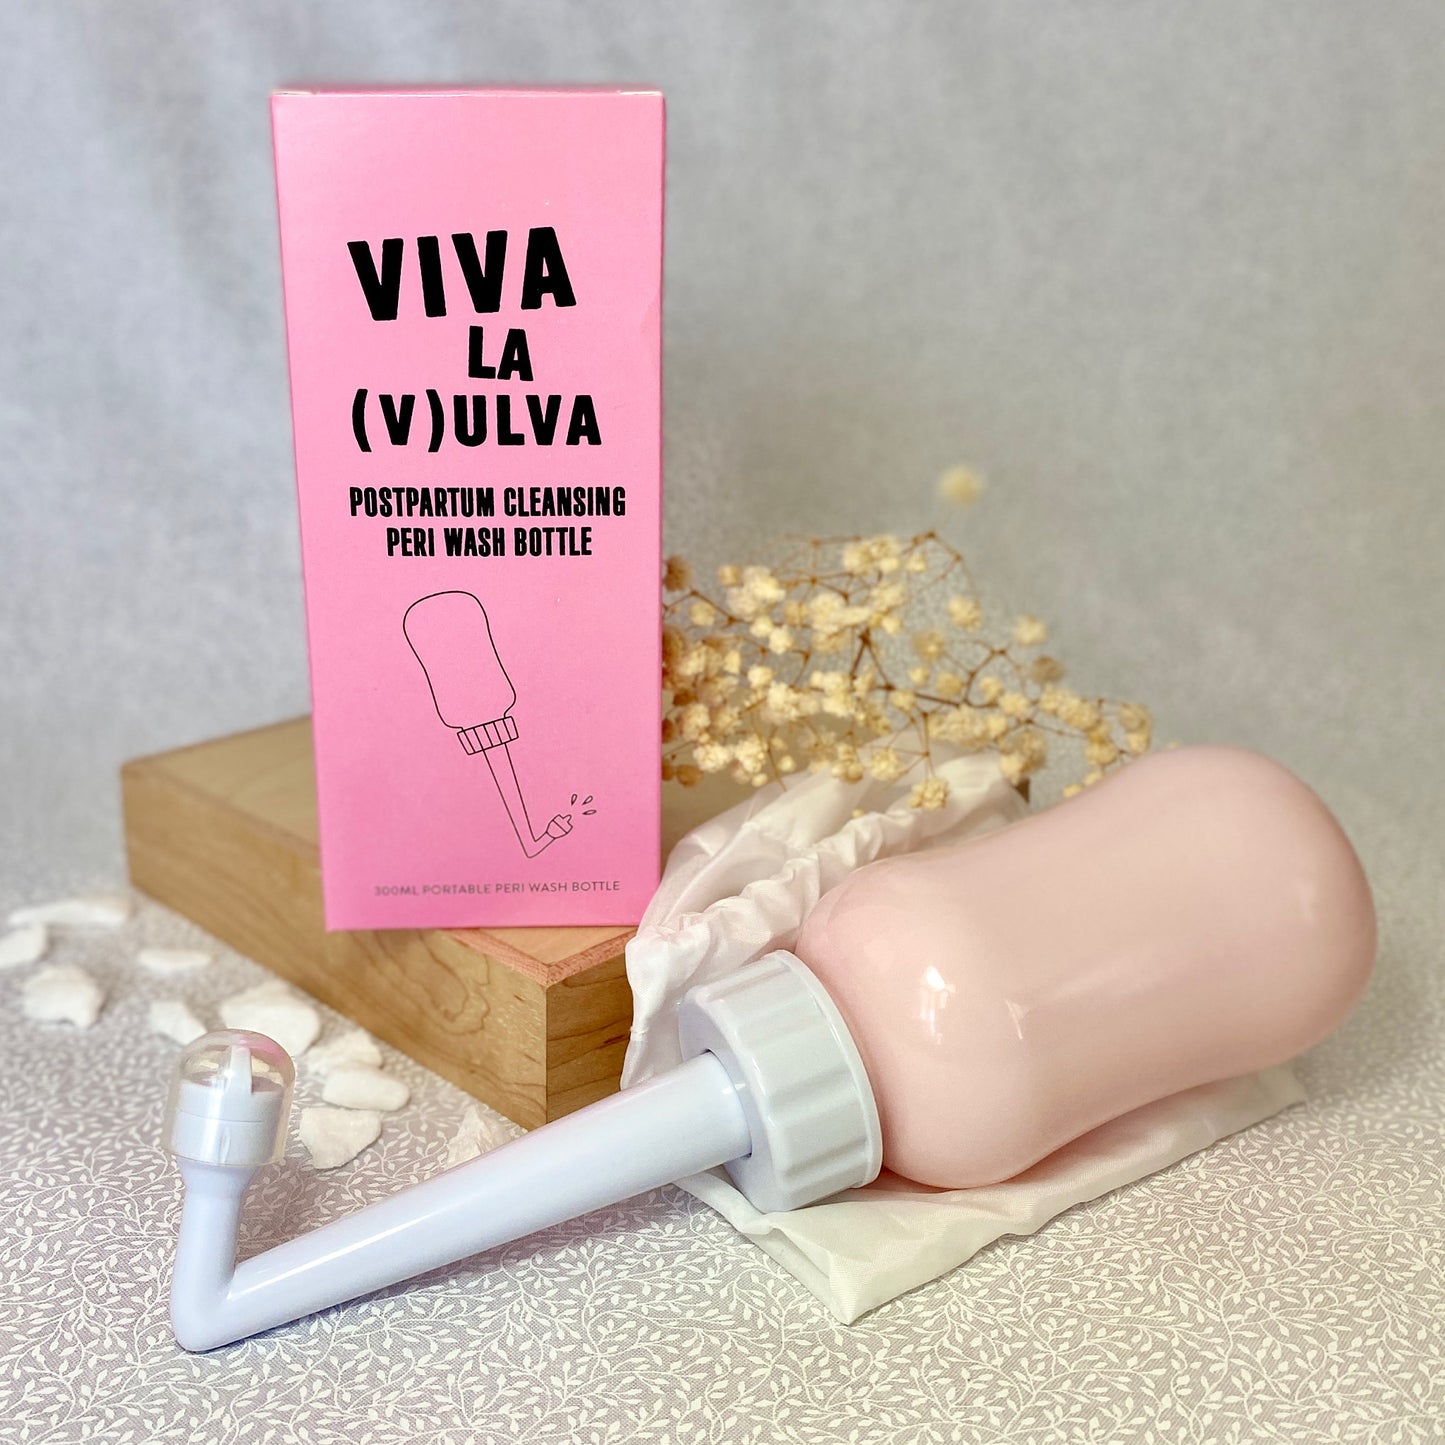 Viva la Vulva - Peri Wash Cleansing Bottle